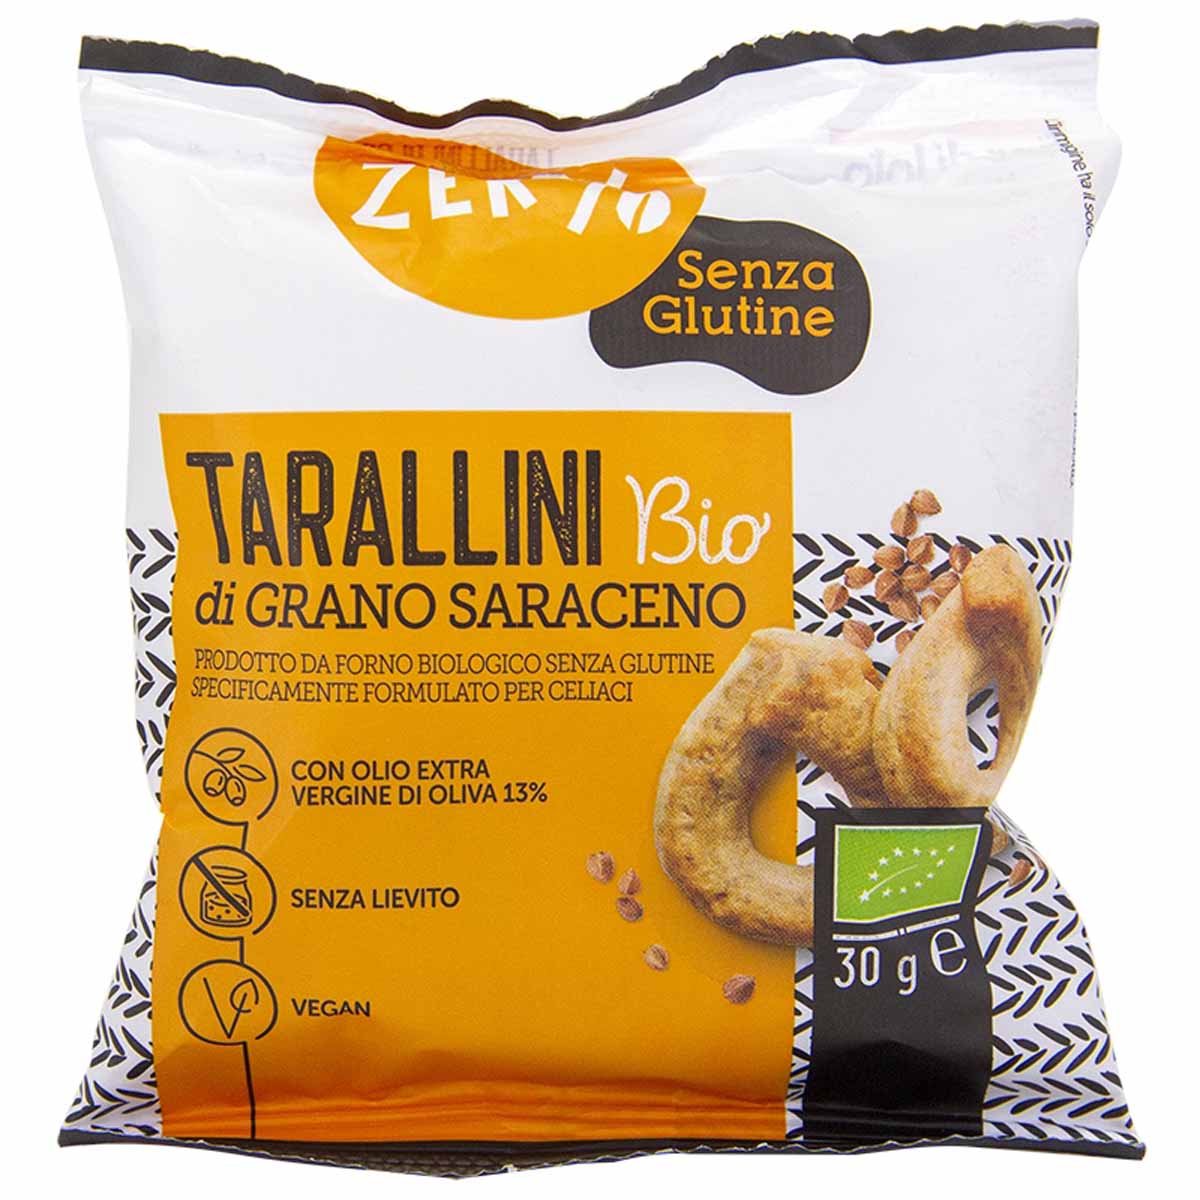 Zer%glutine Tarallini di grano saraceno